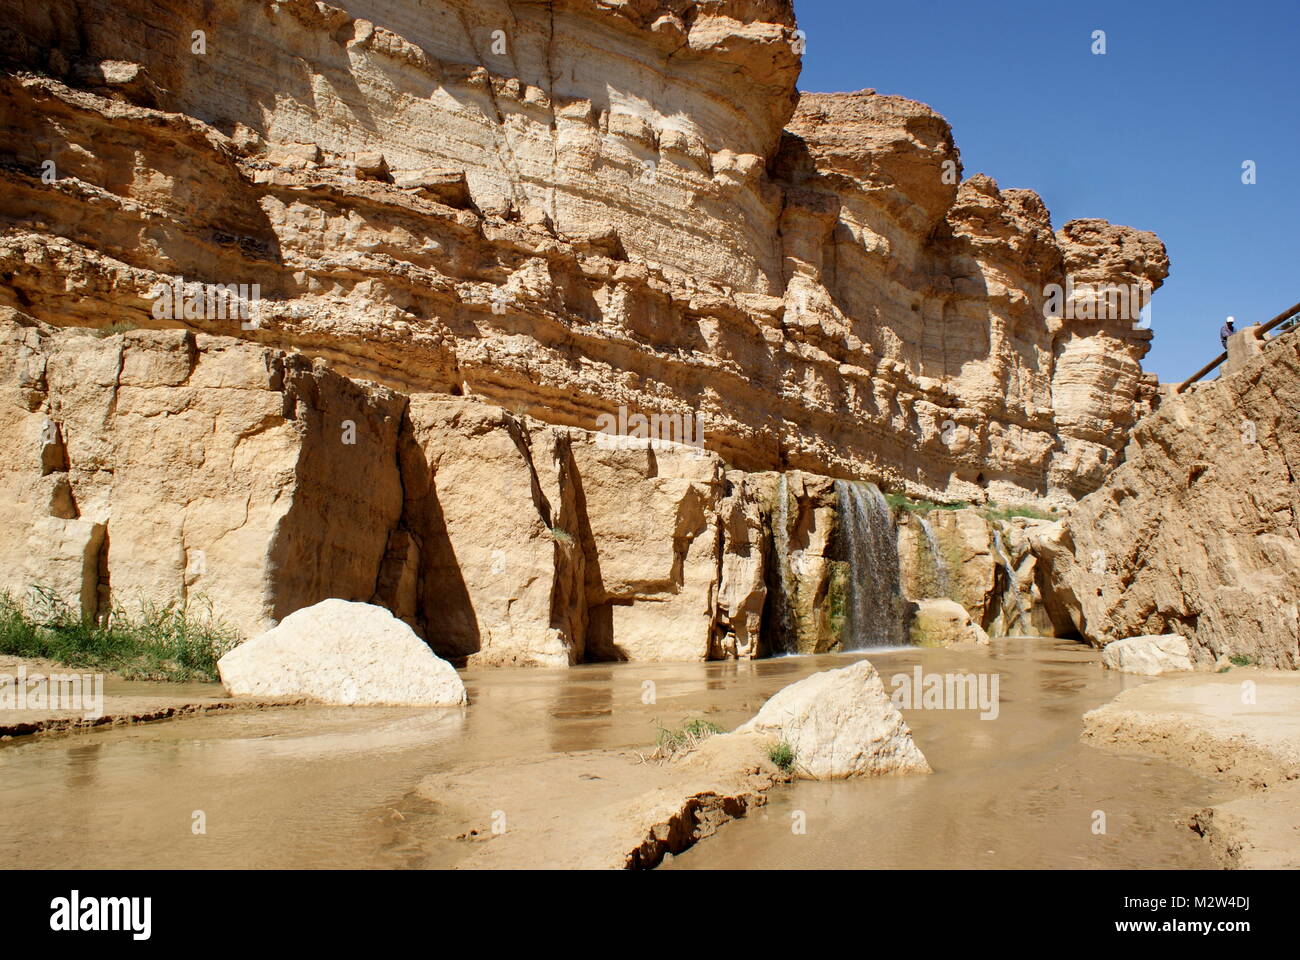 Waterfalls and canyon in Tamerza mountain oasis, Tamerza, Tunisia Stock Photo